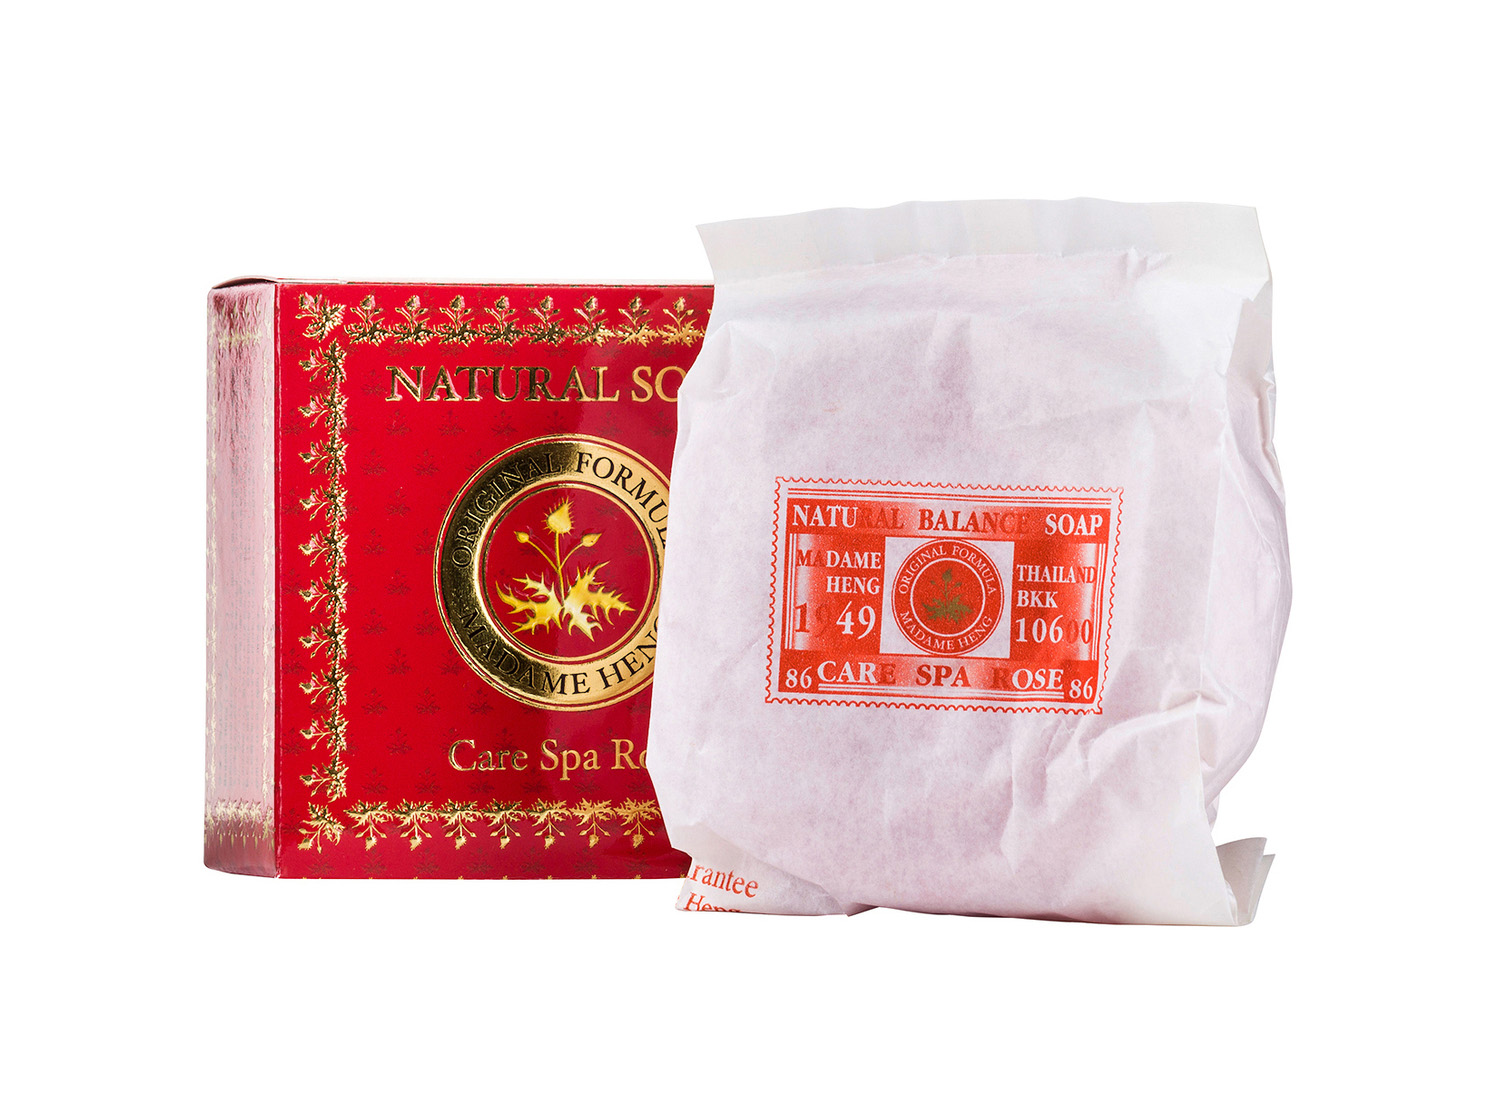 ТАЙСКОЕ МЫЛО МАДАМ ХЕНГ. Натуральное Спа мыло из Тайланда Мадам Хенг Роза Madame Heng Natural Soap Care Spa Rose 50 гр.